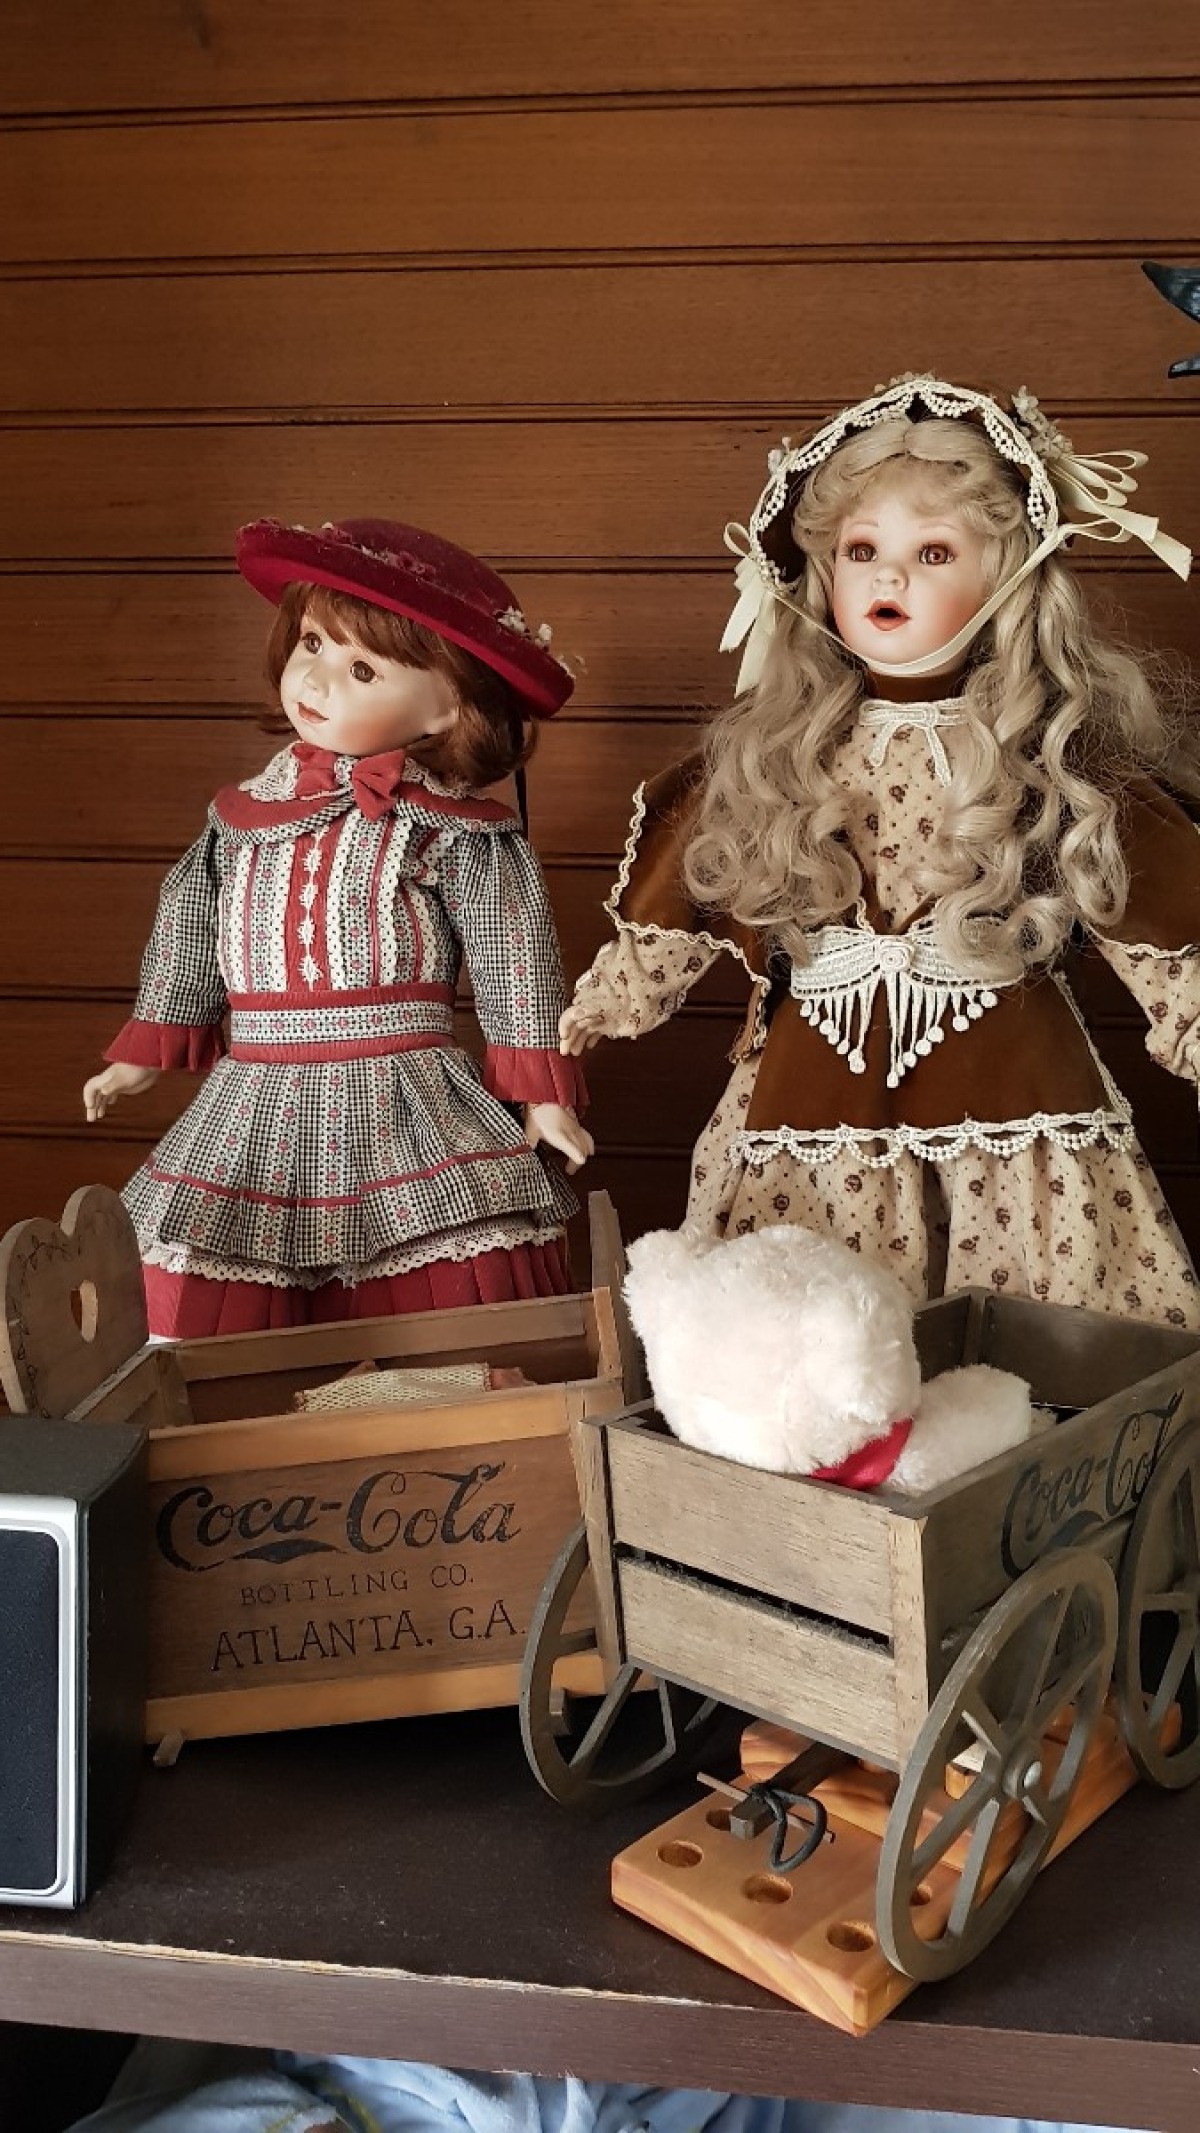 Value of Coca Cola Dolls? | ThriftyFun